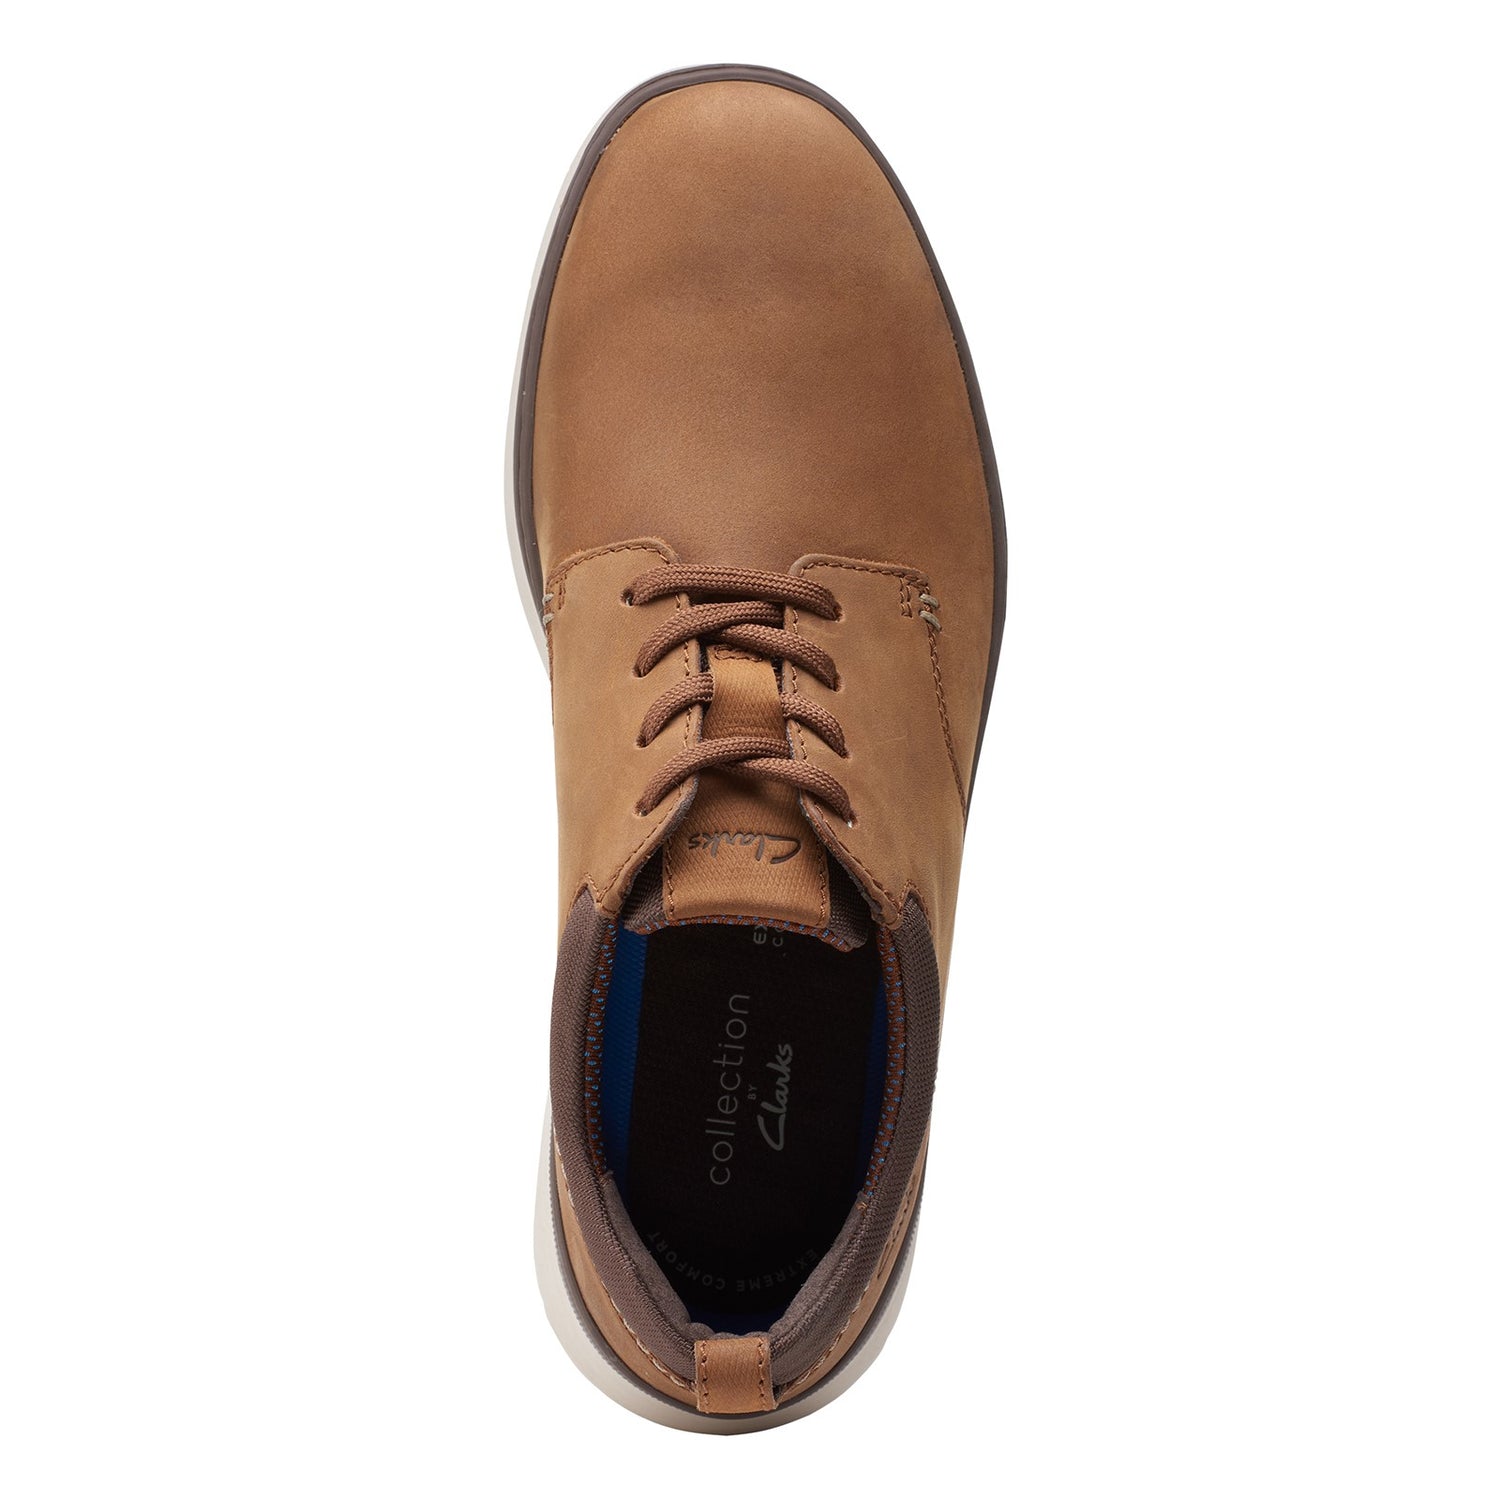 Peltz Shoes  Men's Clarks Braxin Low Oxford BEESWAX 26155721